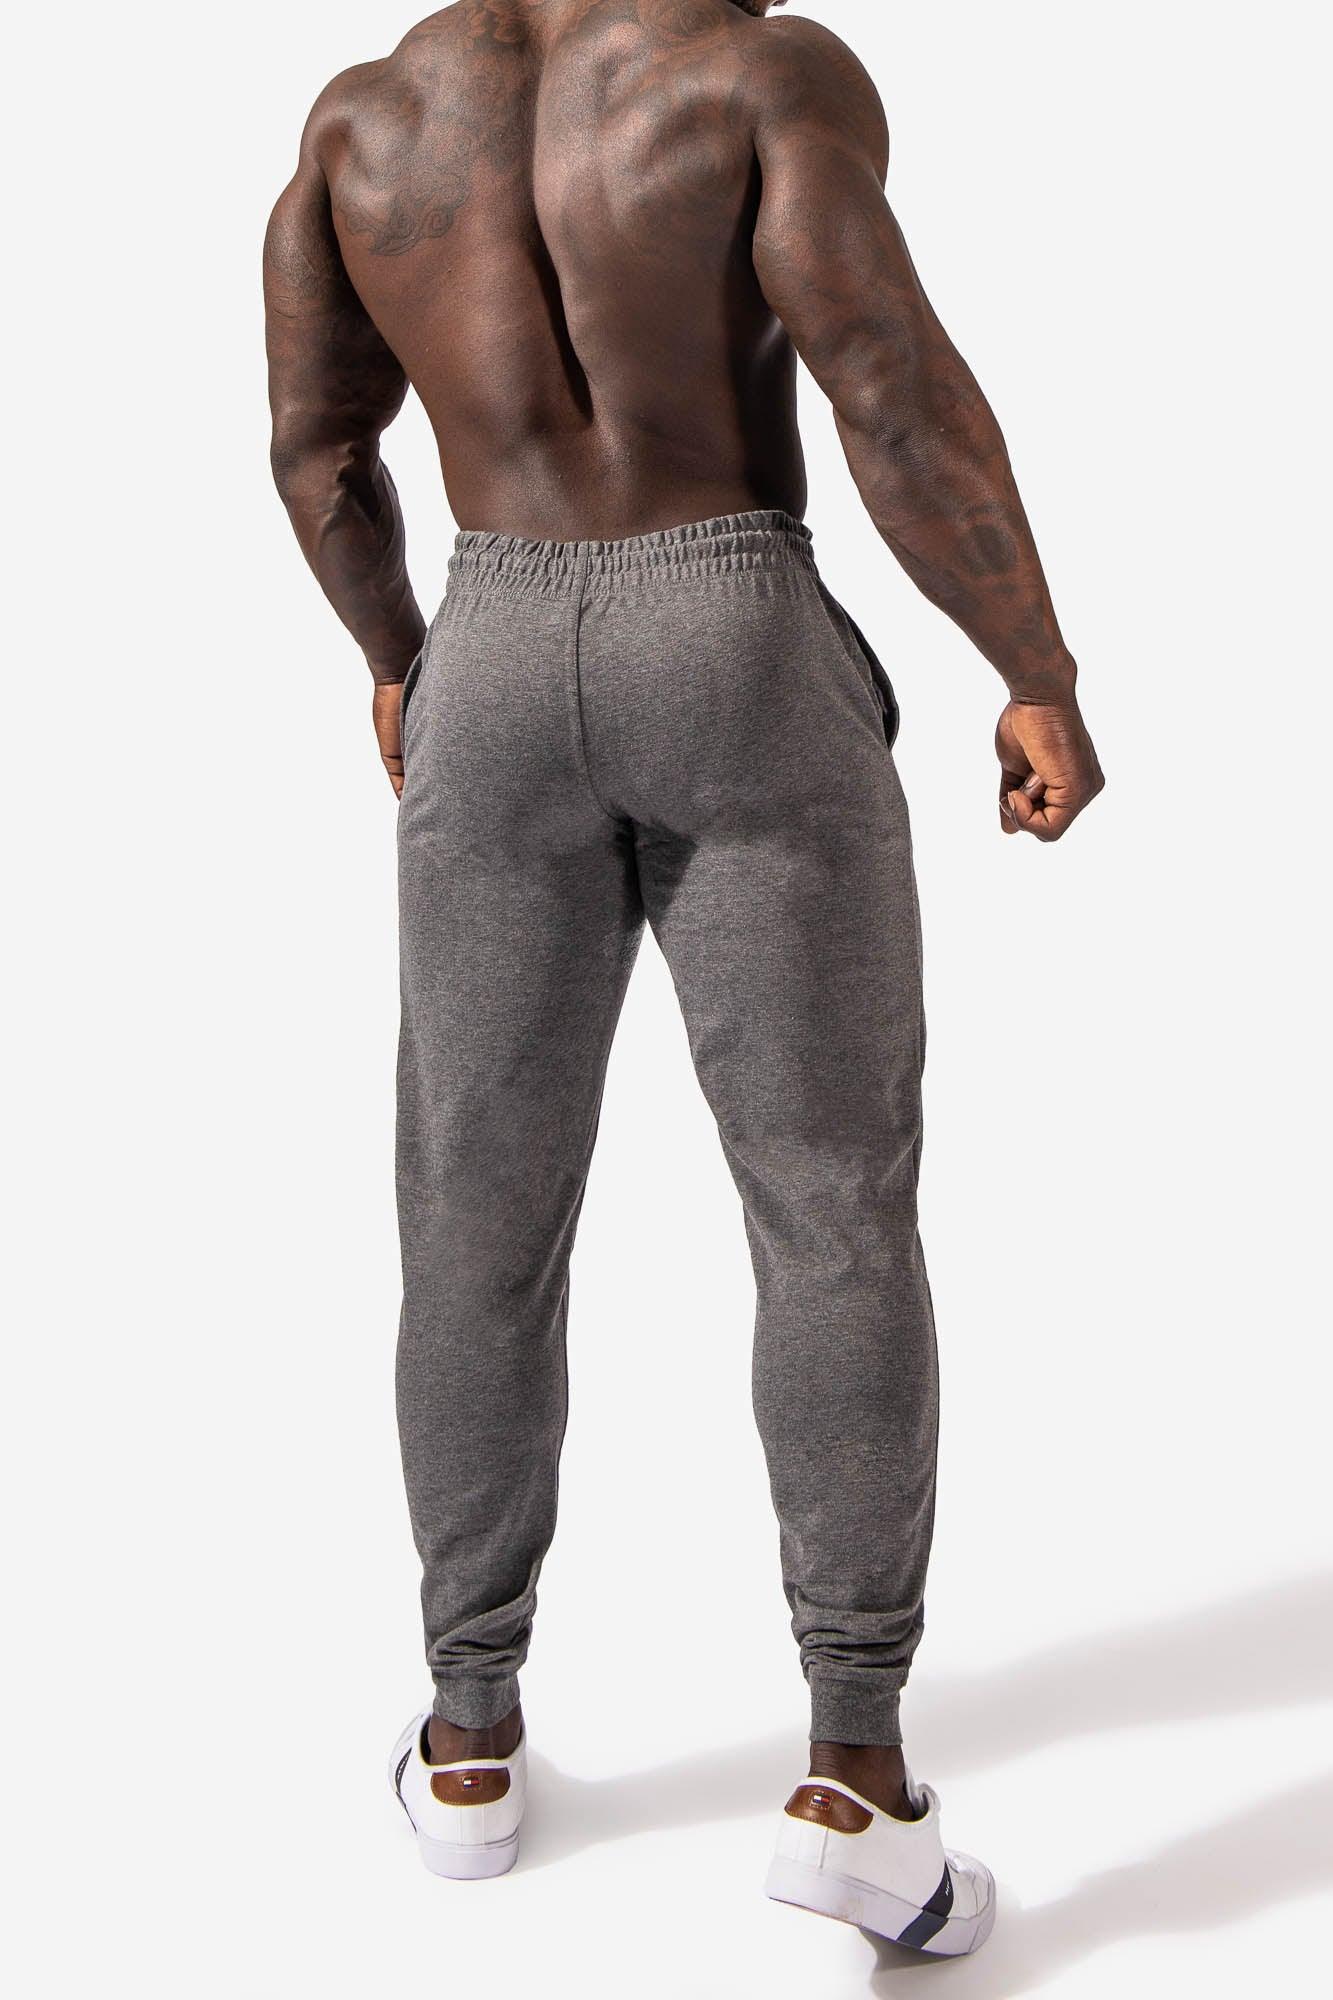 Nike Dri-Fit Tight (legging) Men, Men's Fashion, Activewear on Carousell